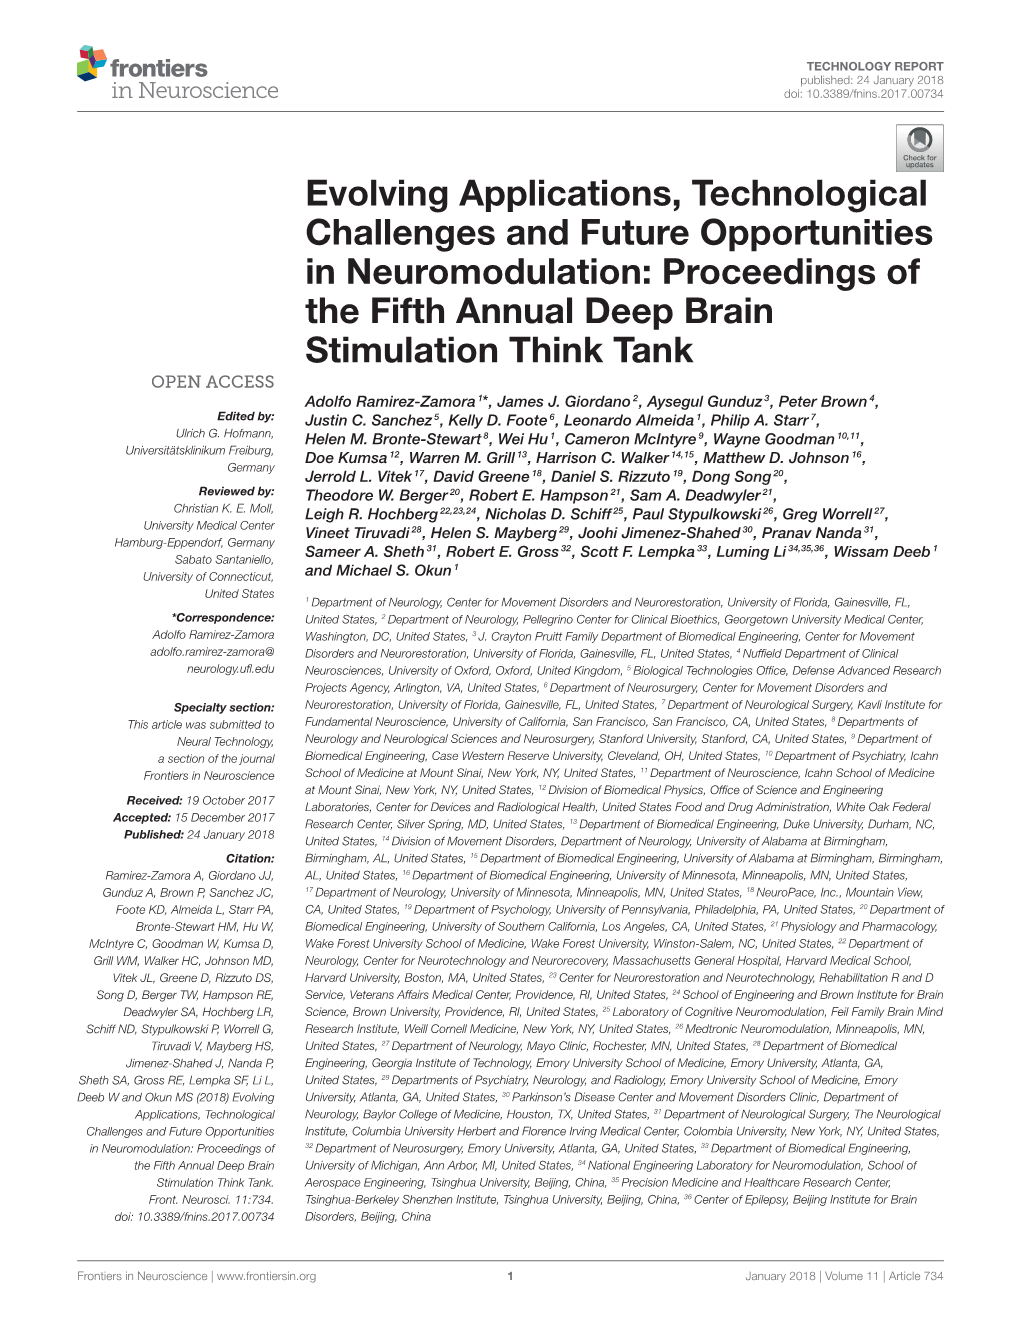 Proceedings of the Fifth Annual Deep Brain Stimulation Think Tank